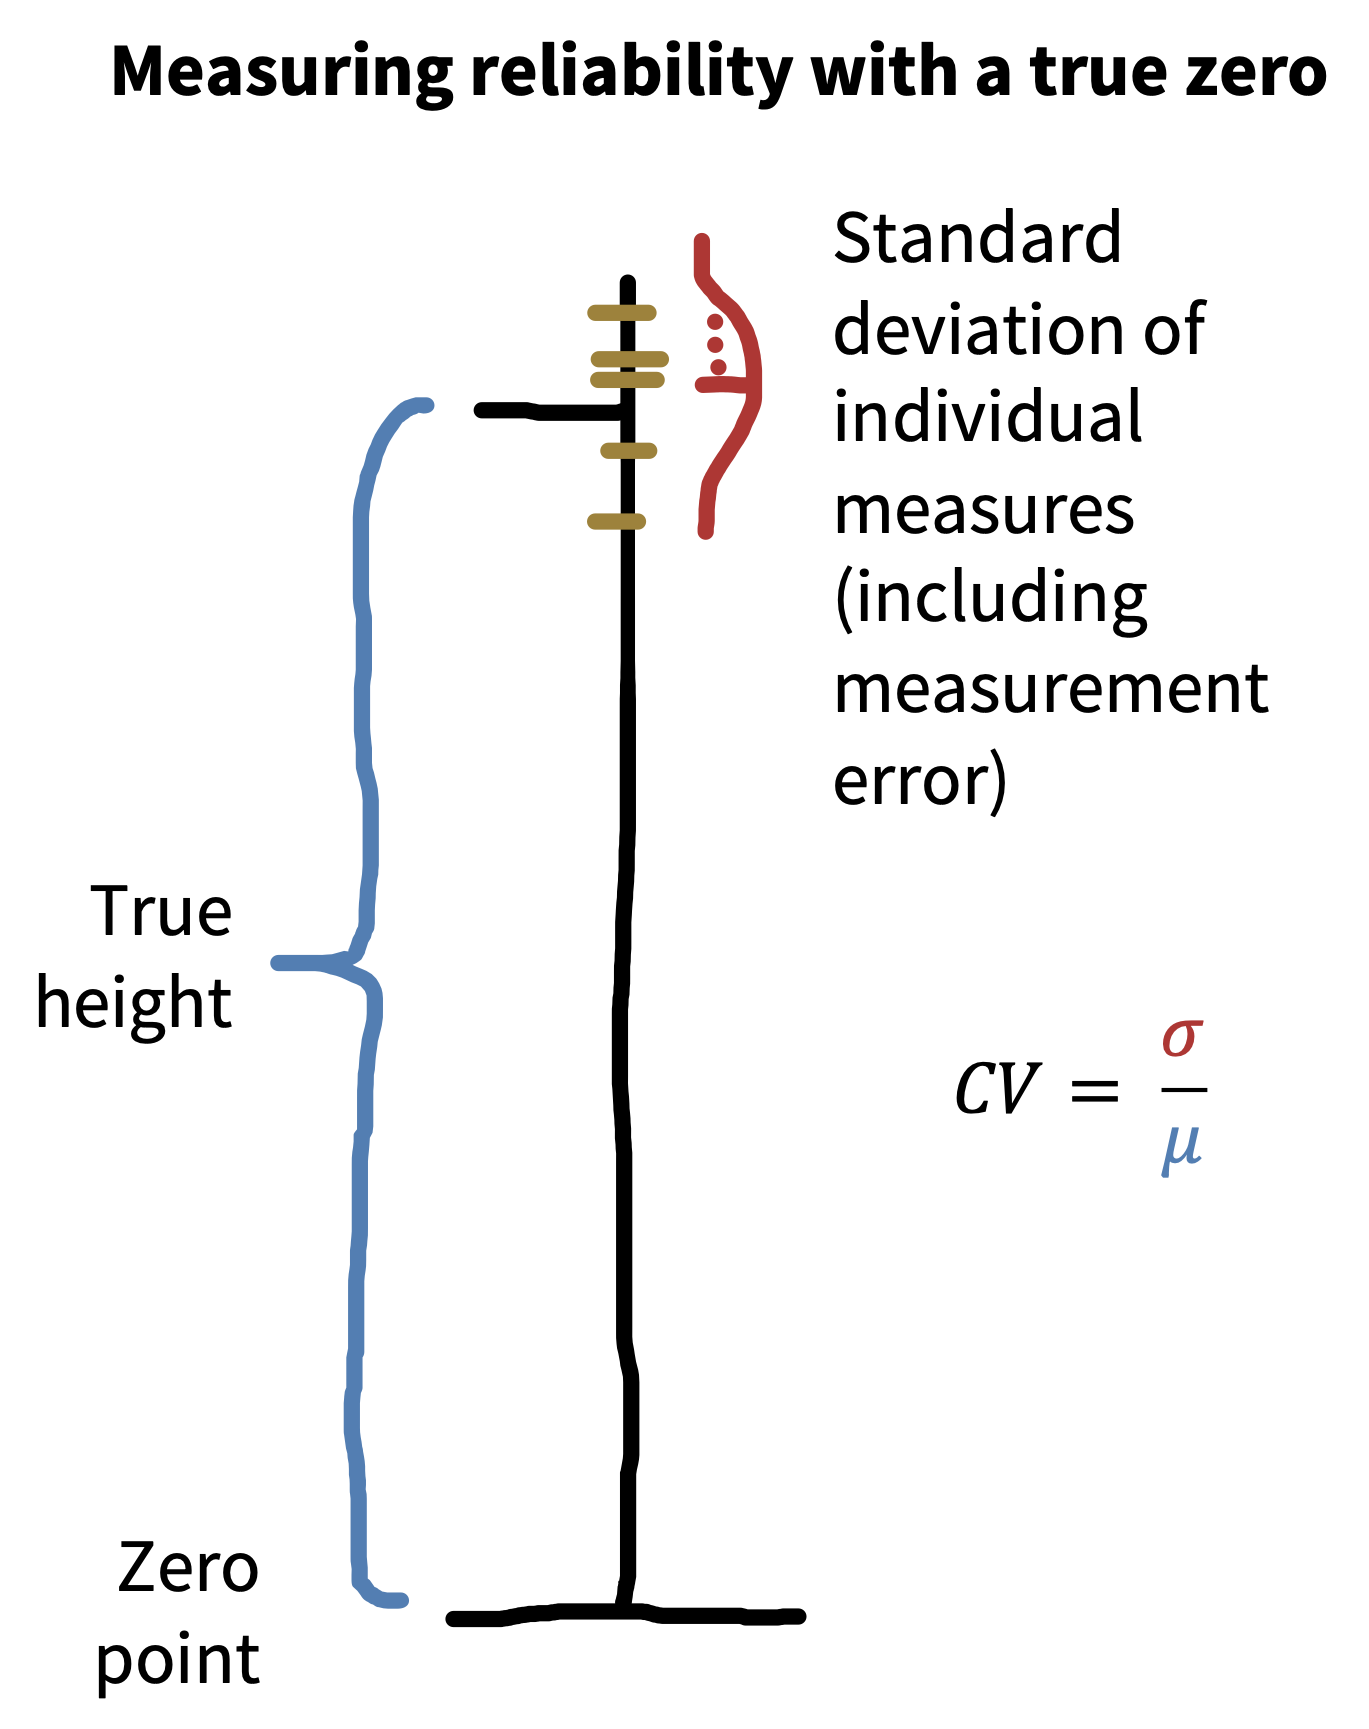 Computing the coefficient of variation (CV).